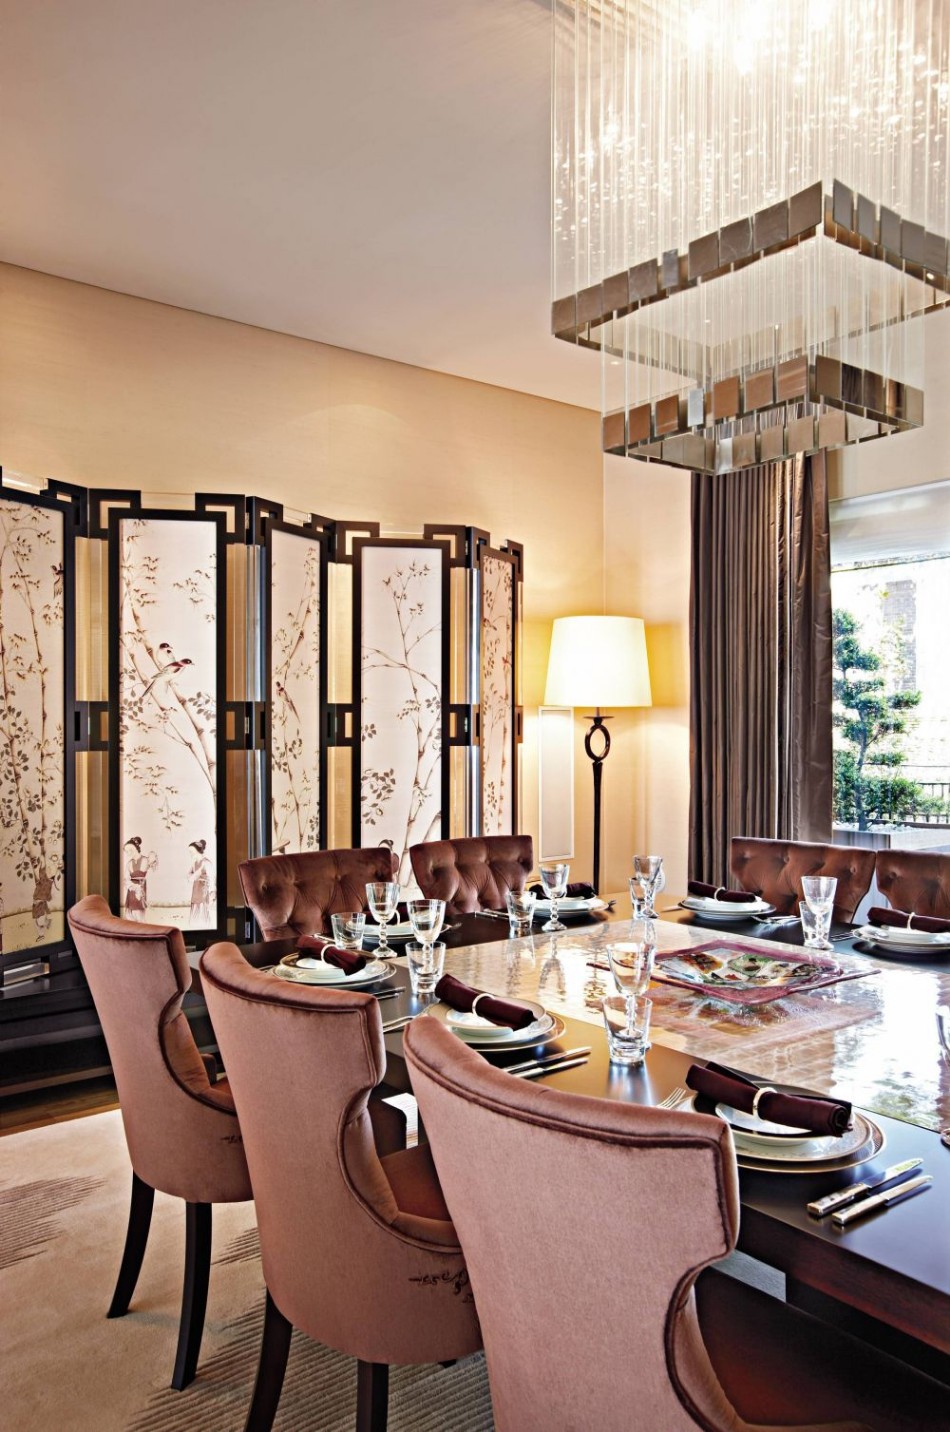 15 Dining Room Ideas By Top Interior Designers From England | www.bocadolobo.com #interiordesigner #topinteriordesigners #diningroom #diningarea #diningdesign #thediningroom #luxuriousdiningroom @moderndiningtables